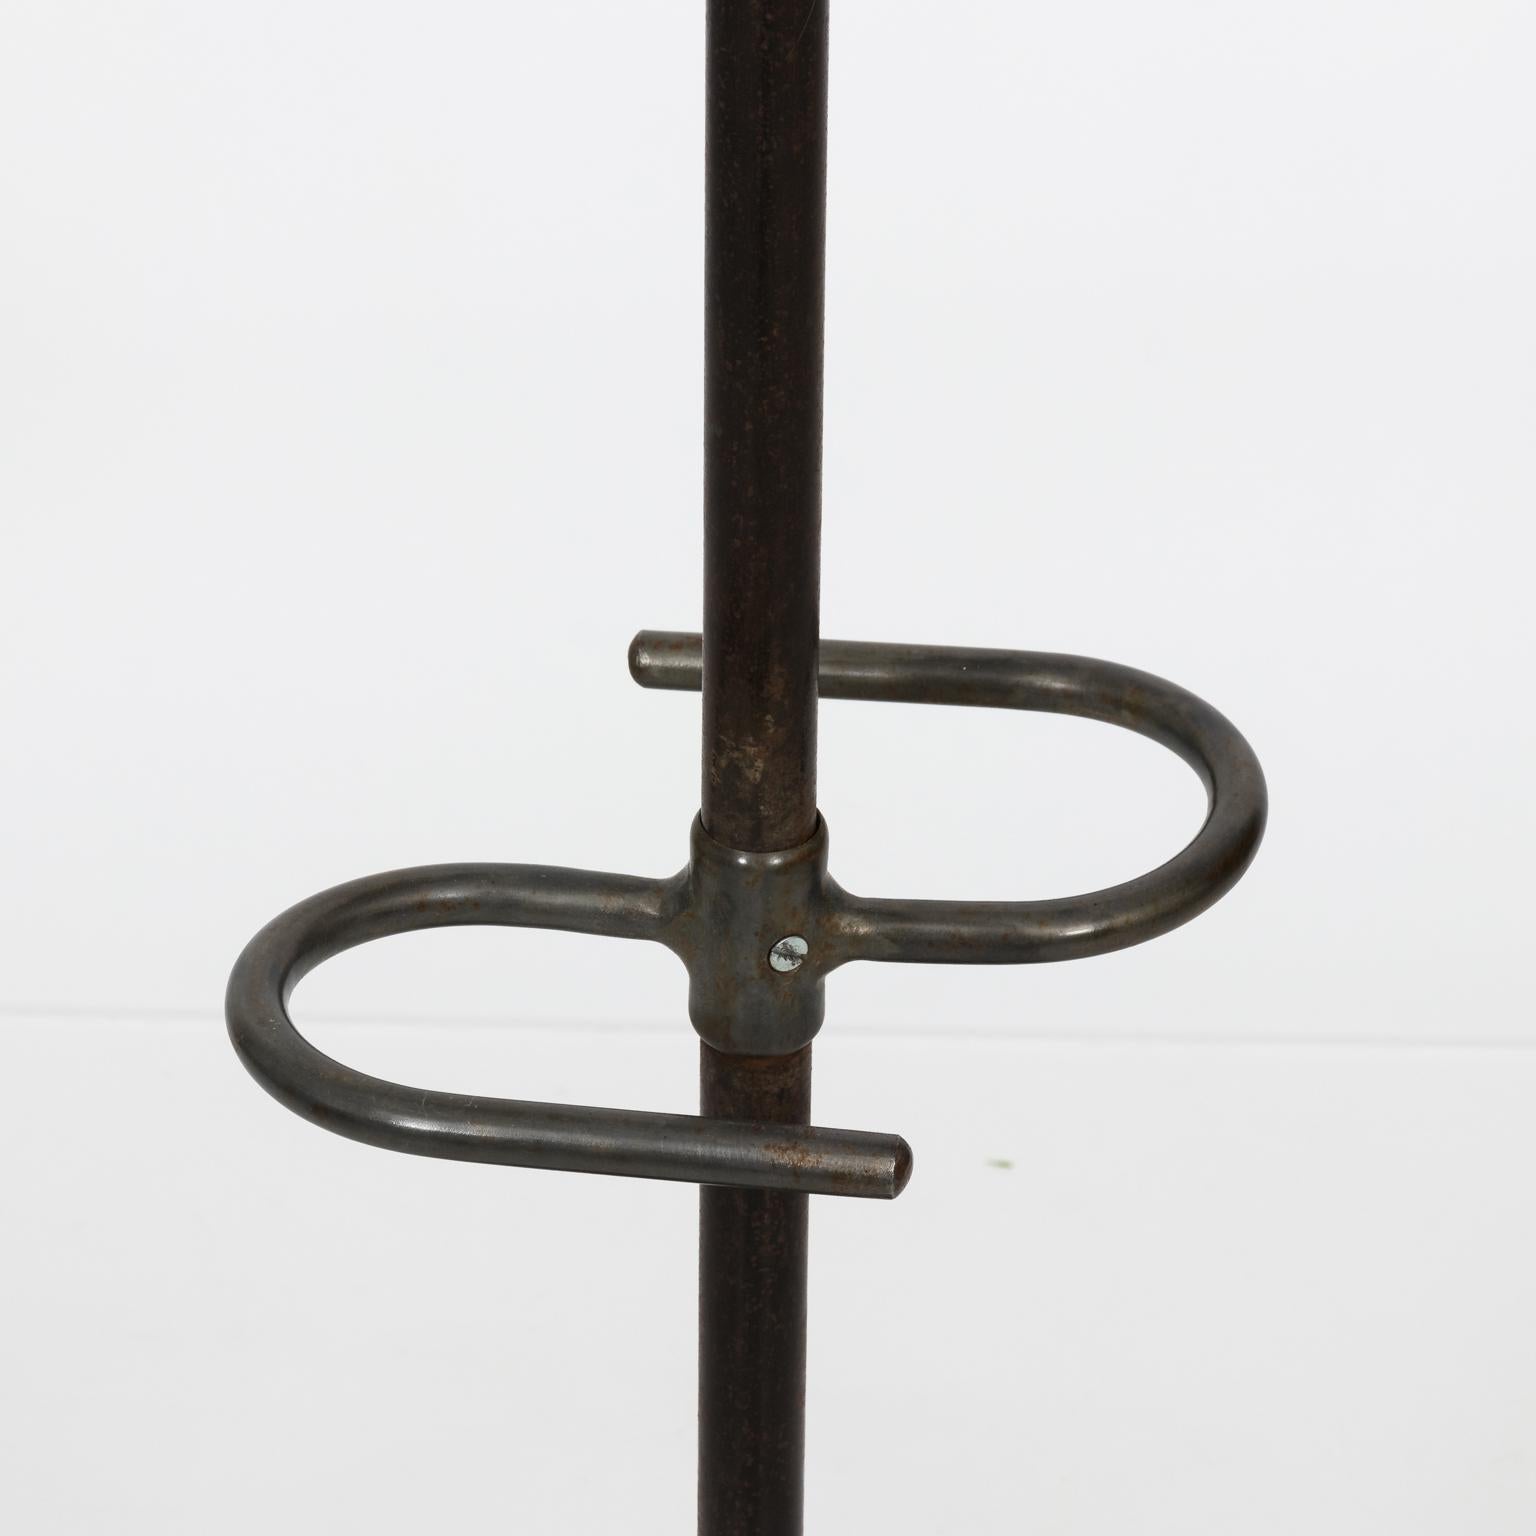 Vintage metal coat rack with six hooks and bottom umbrella stand, circa 1950s.